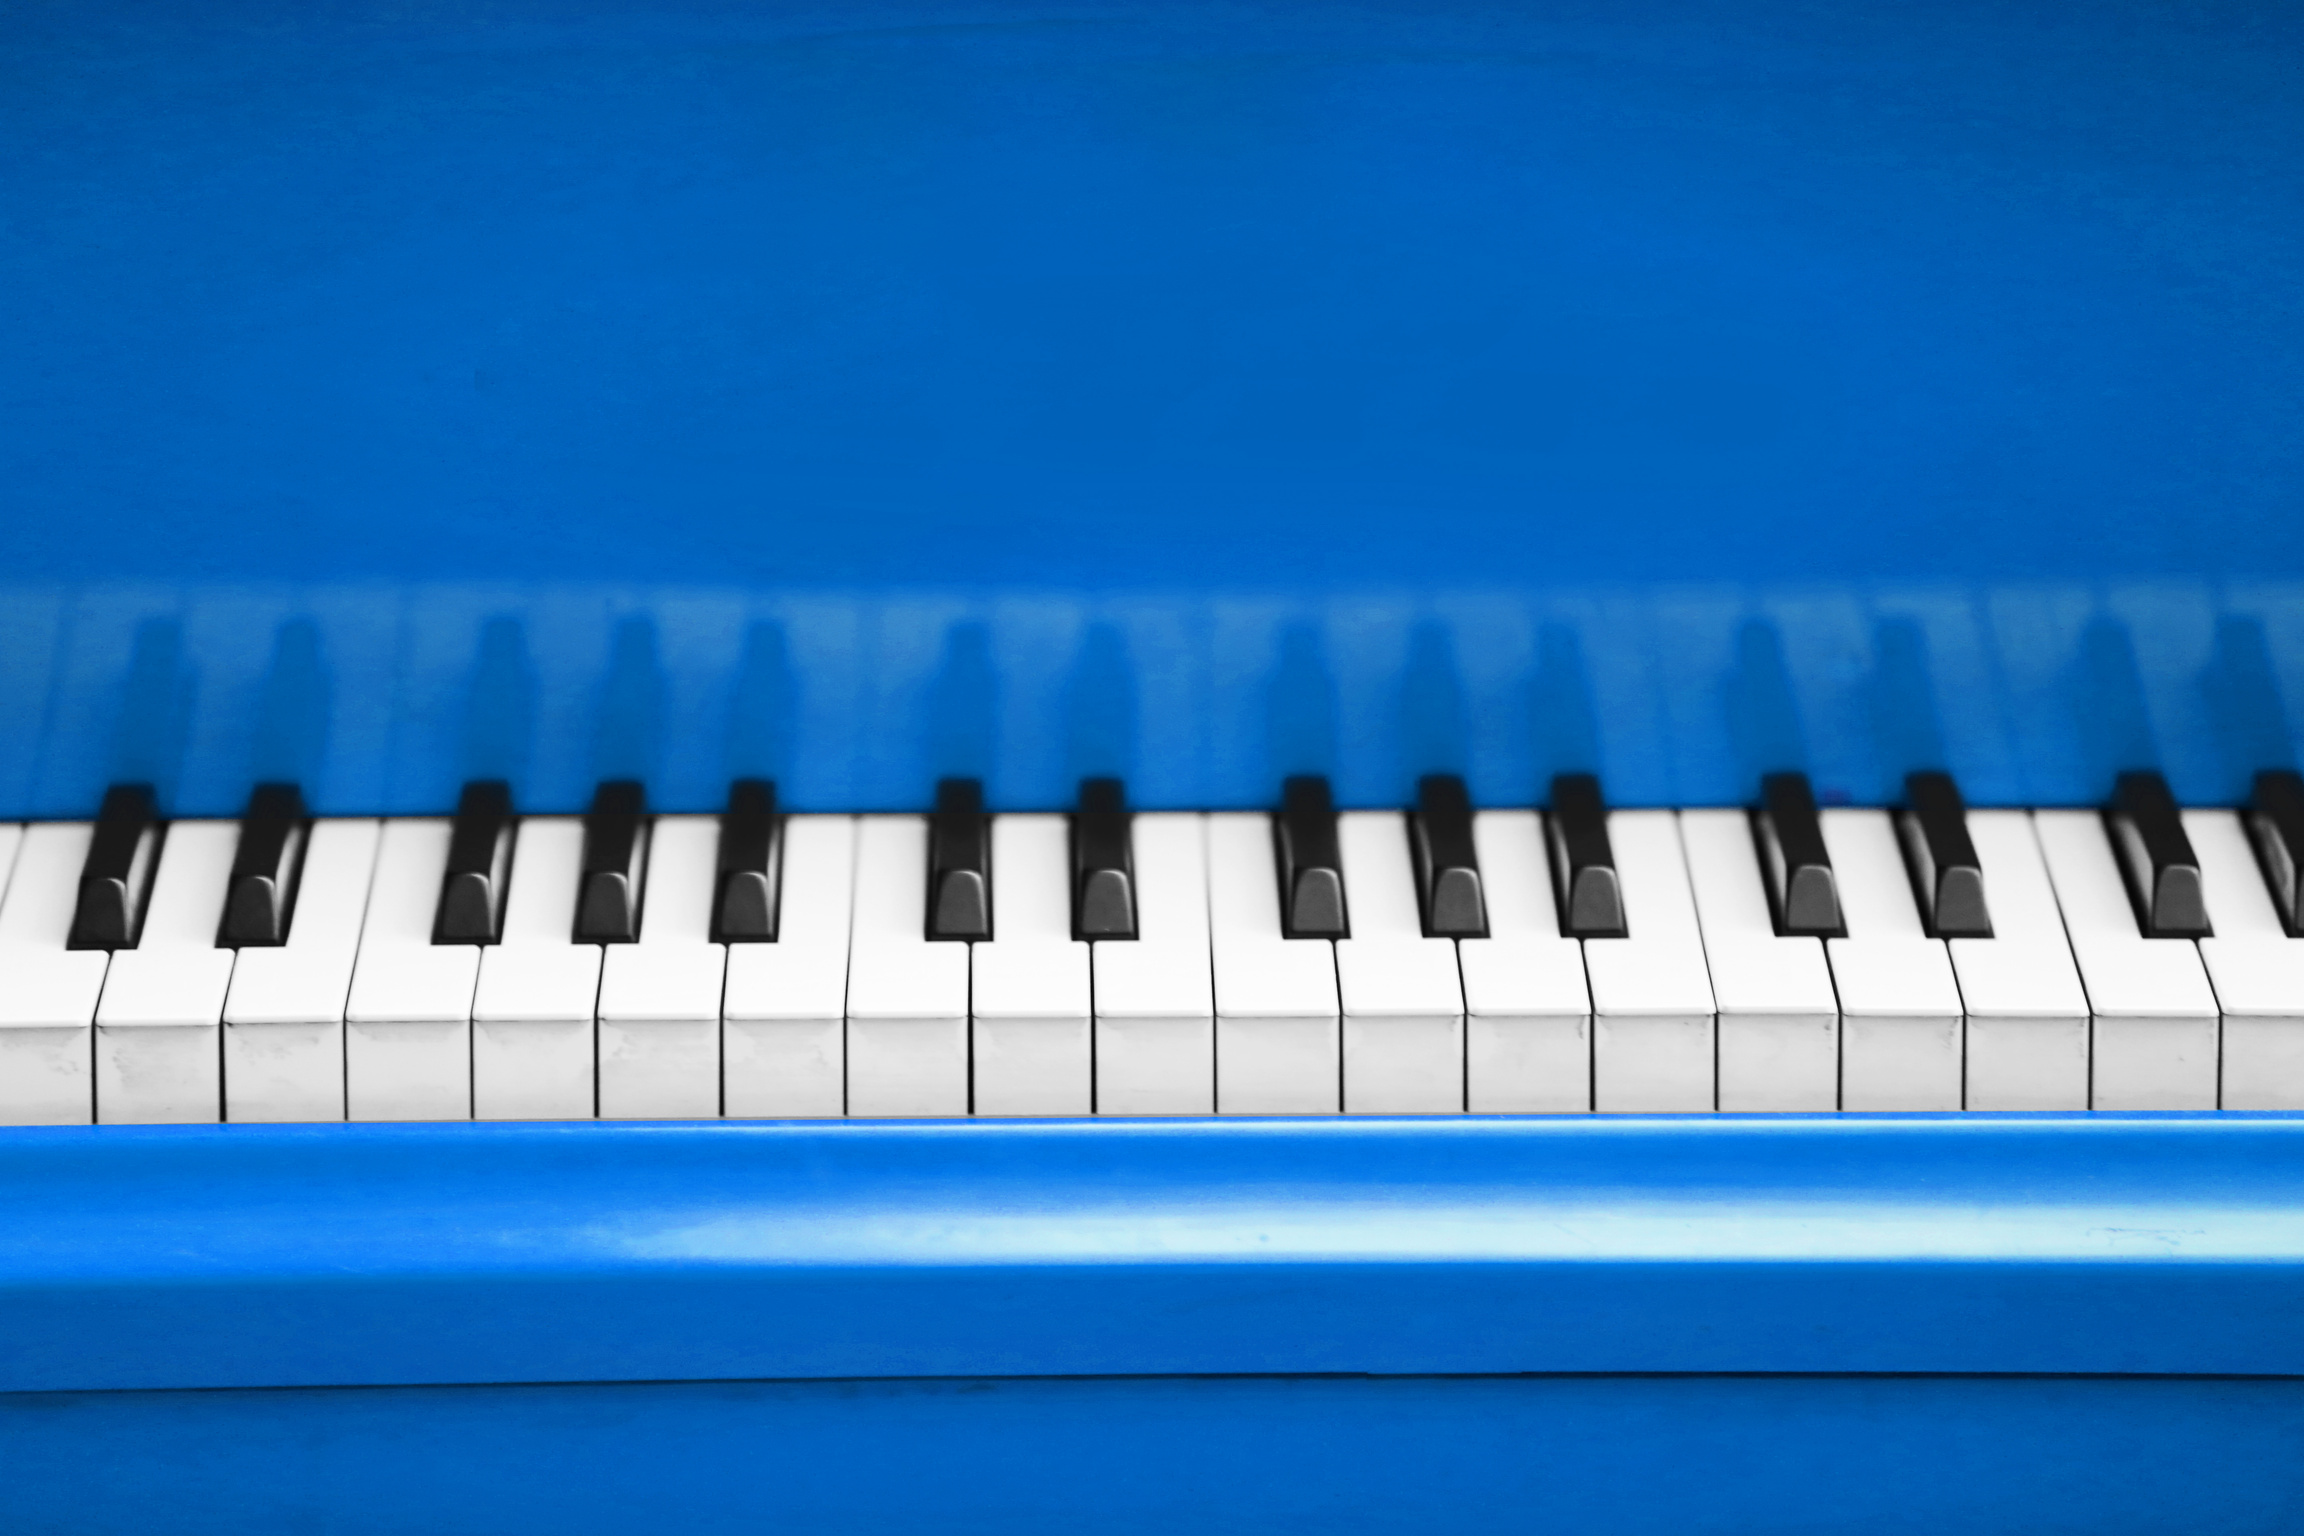 Piano Keys of Blue Piano Close up